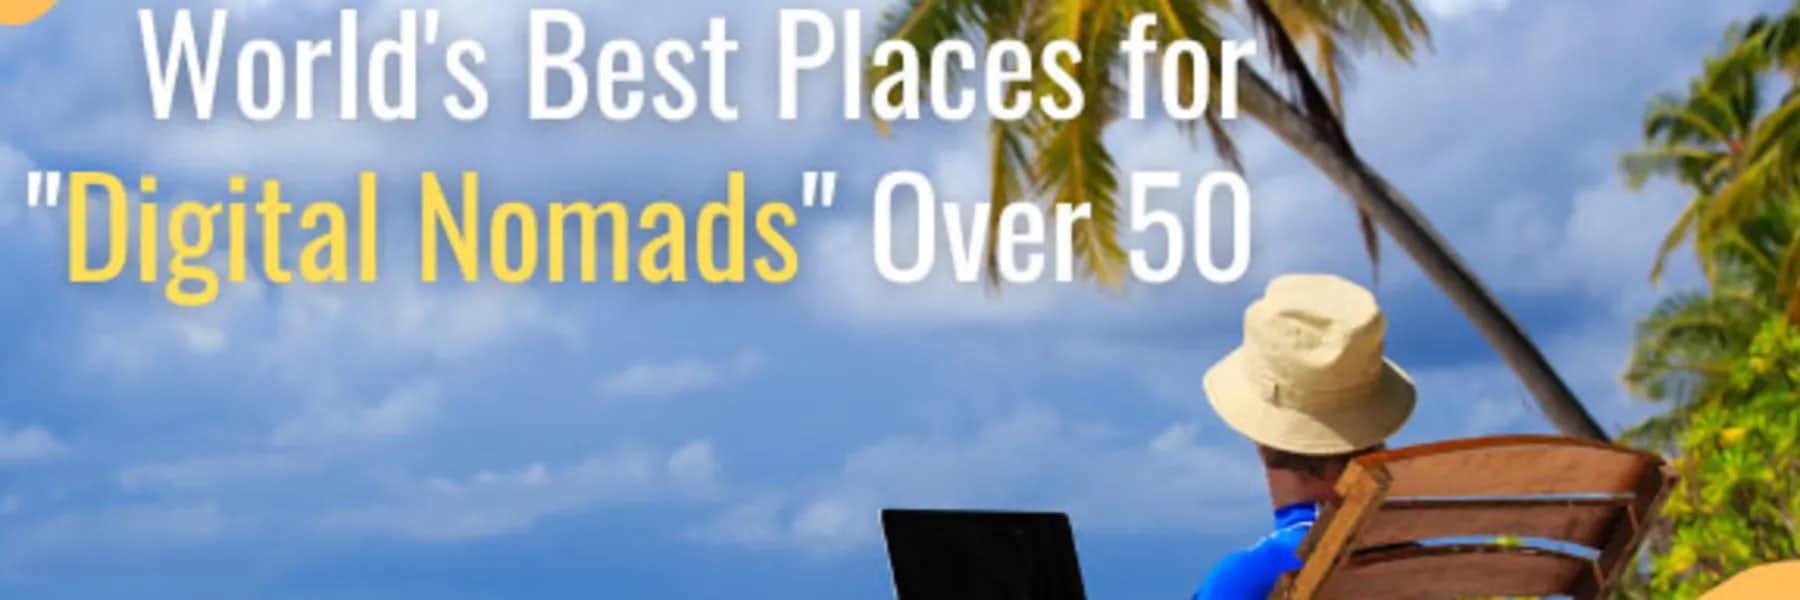 World’s-Best-Places-for-“Digital-Nomads”-Over-50